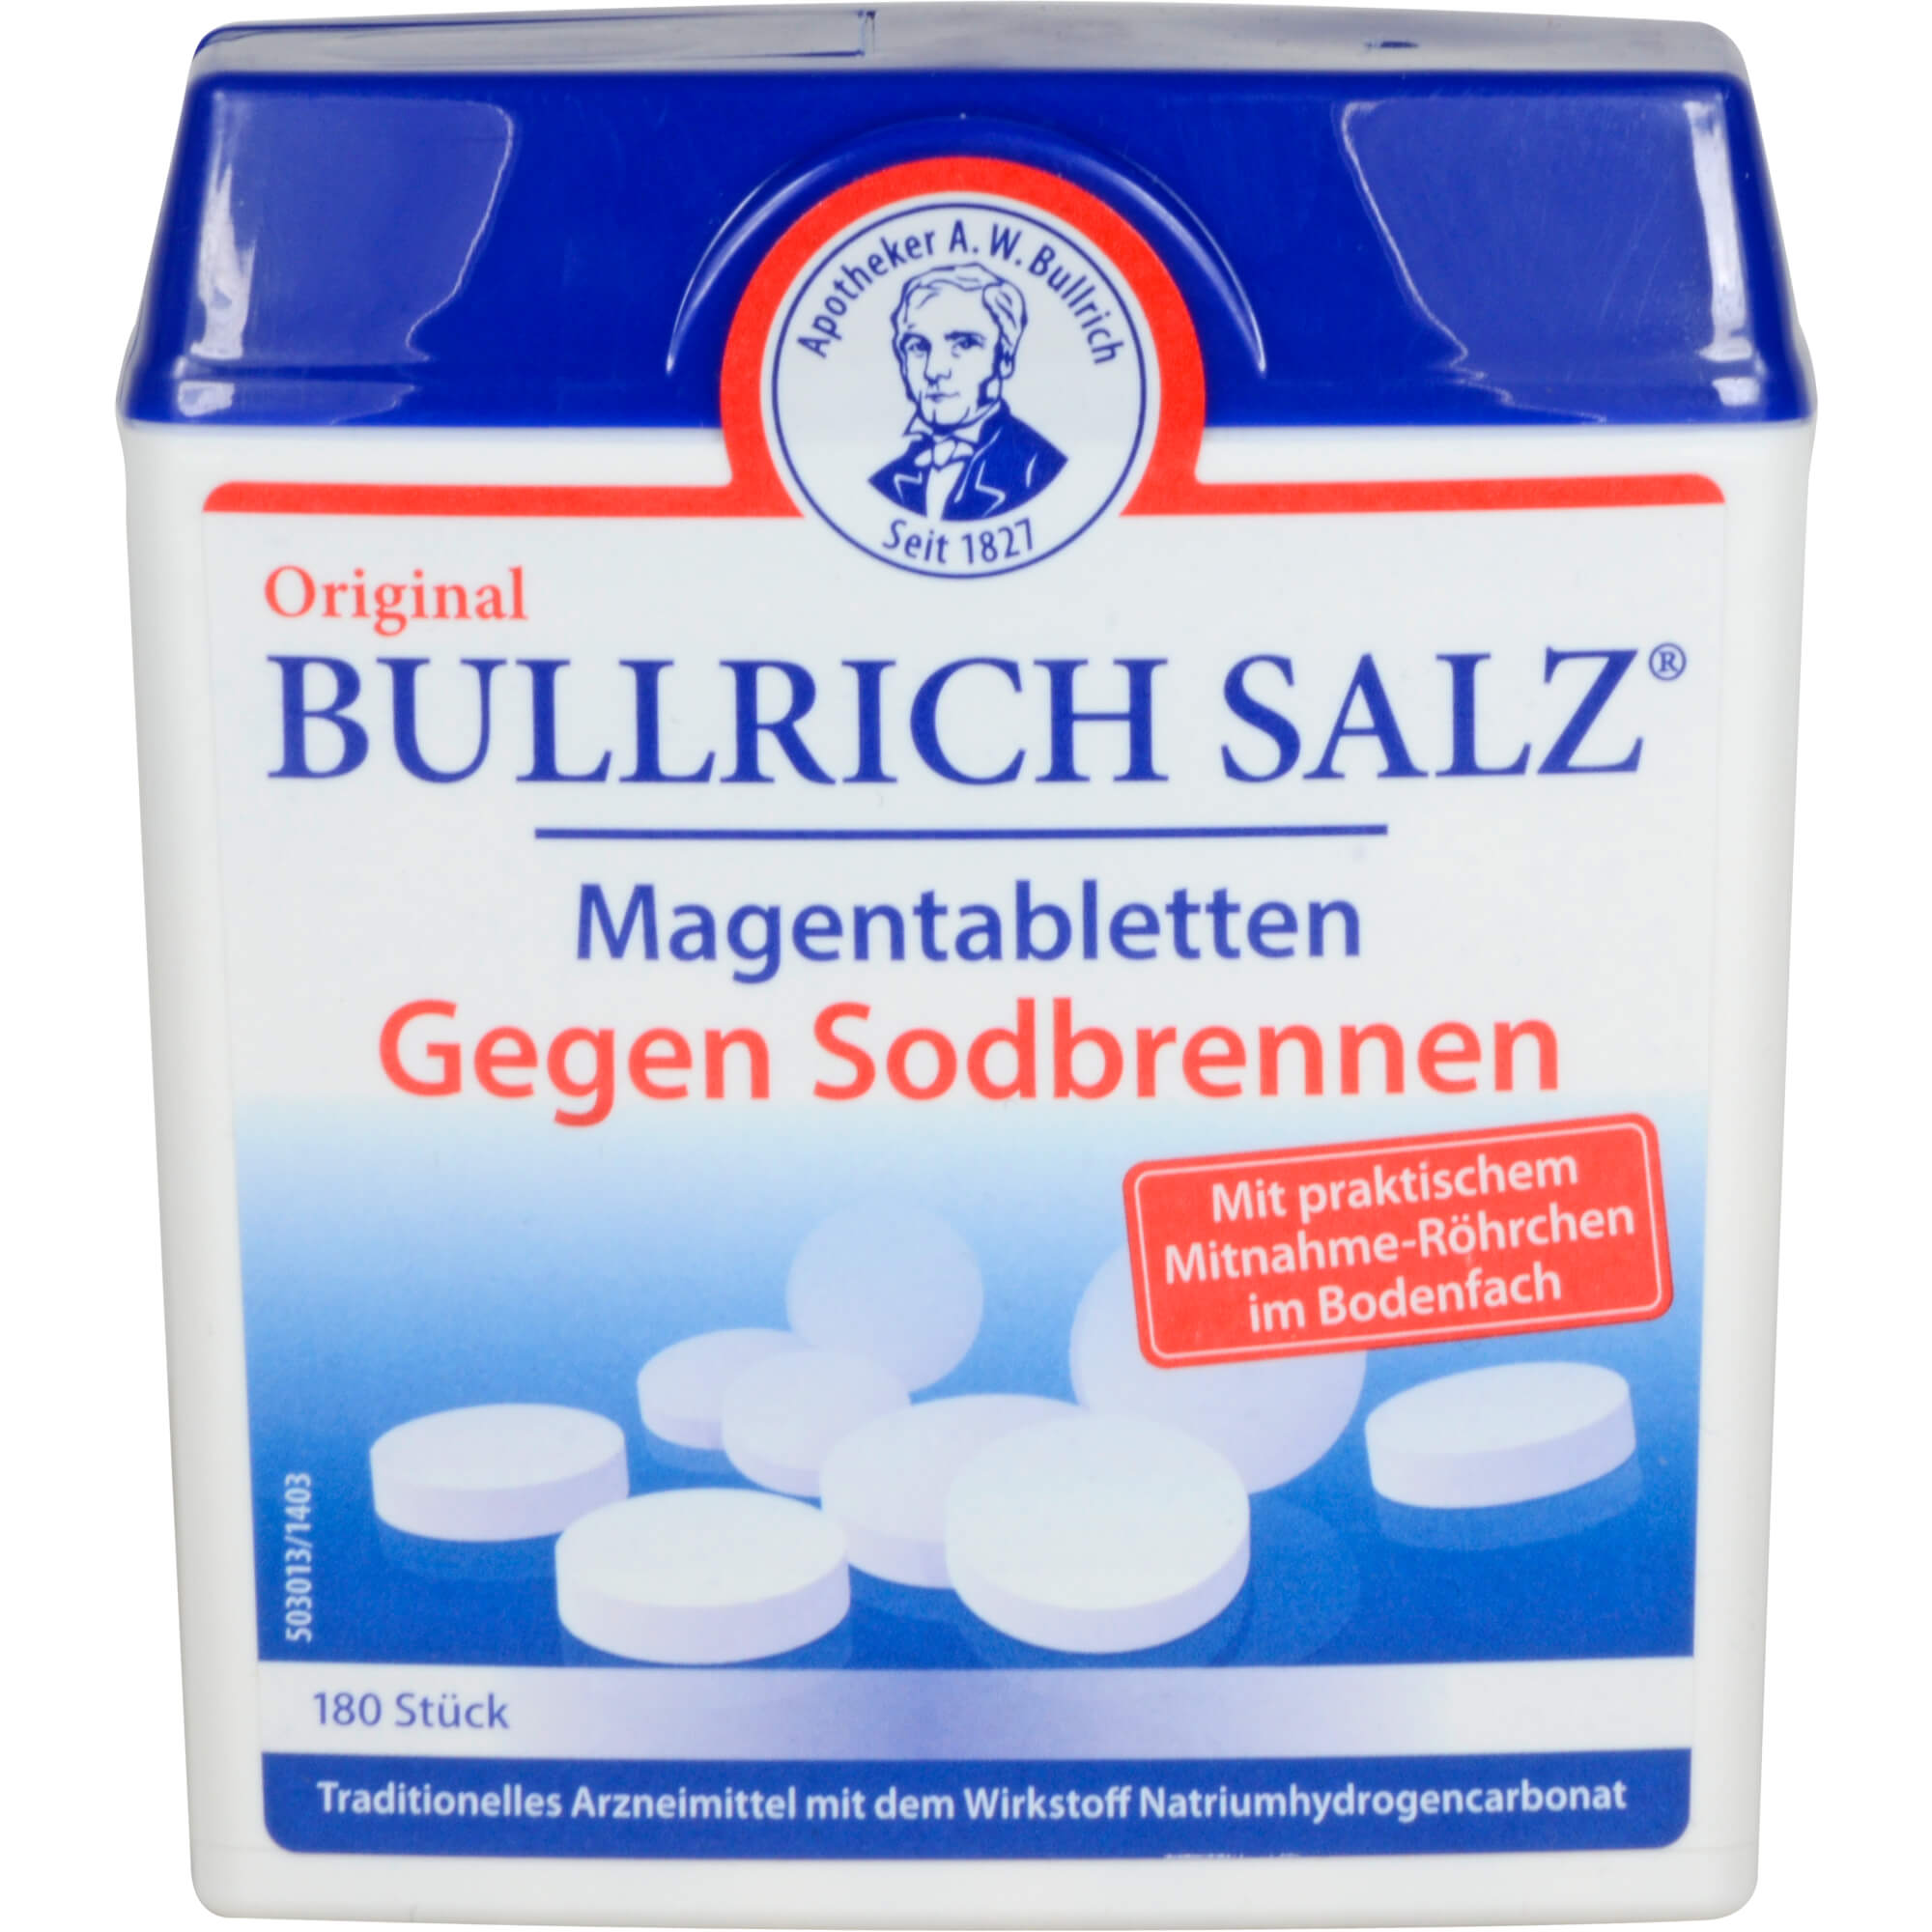 BULLRICH Salz Tabletten